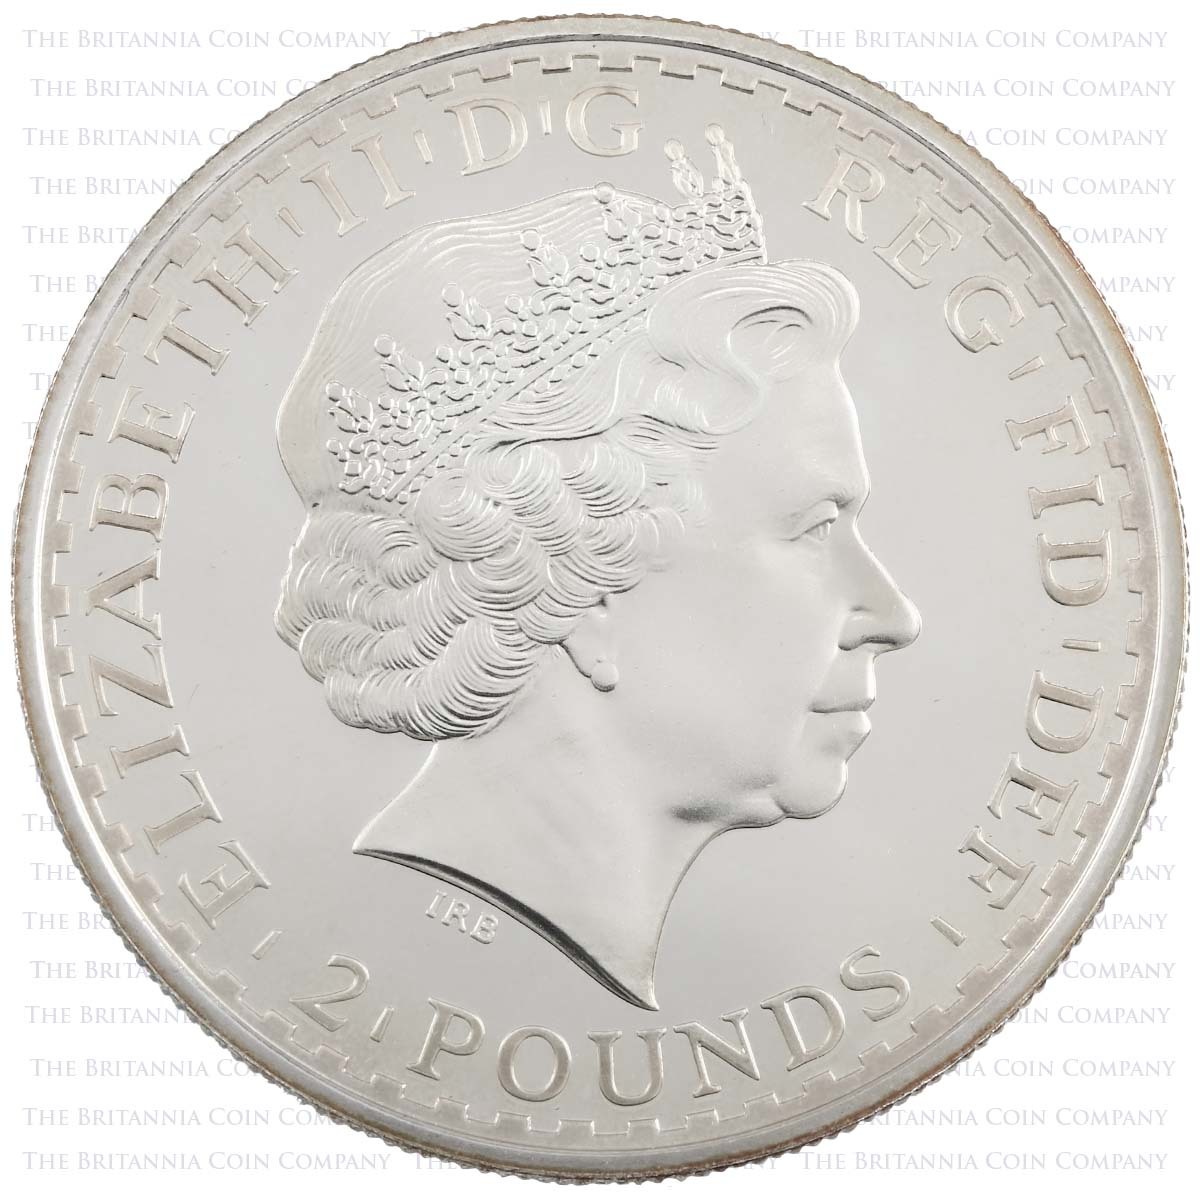 2001 Britannia Four Coin Silver Proof Set 1oz Obverse